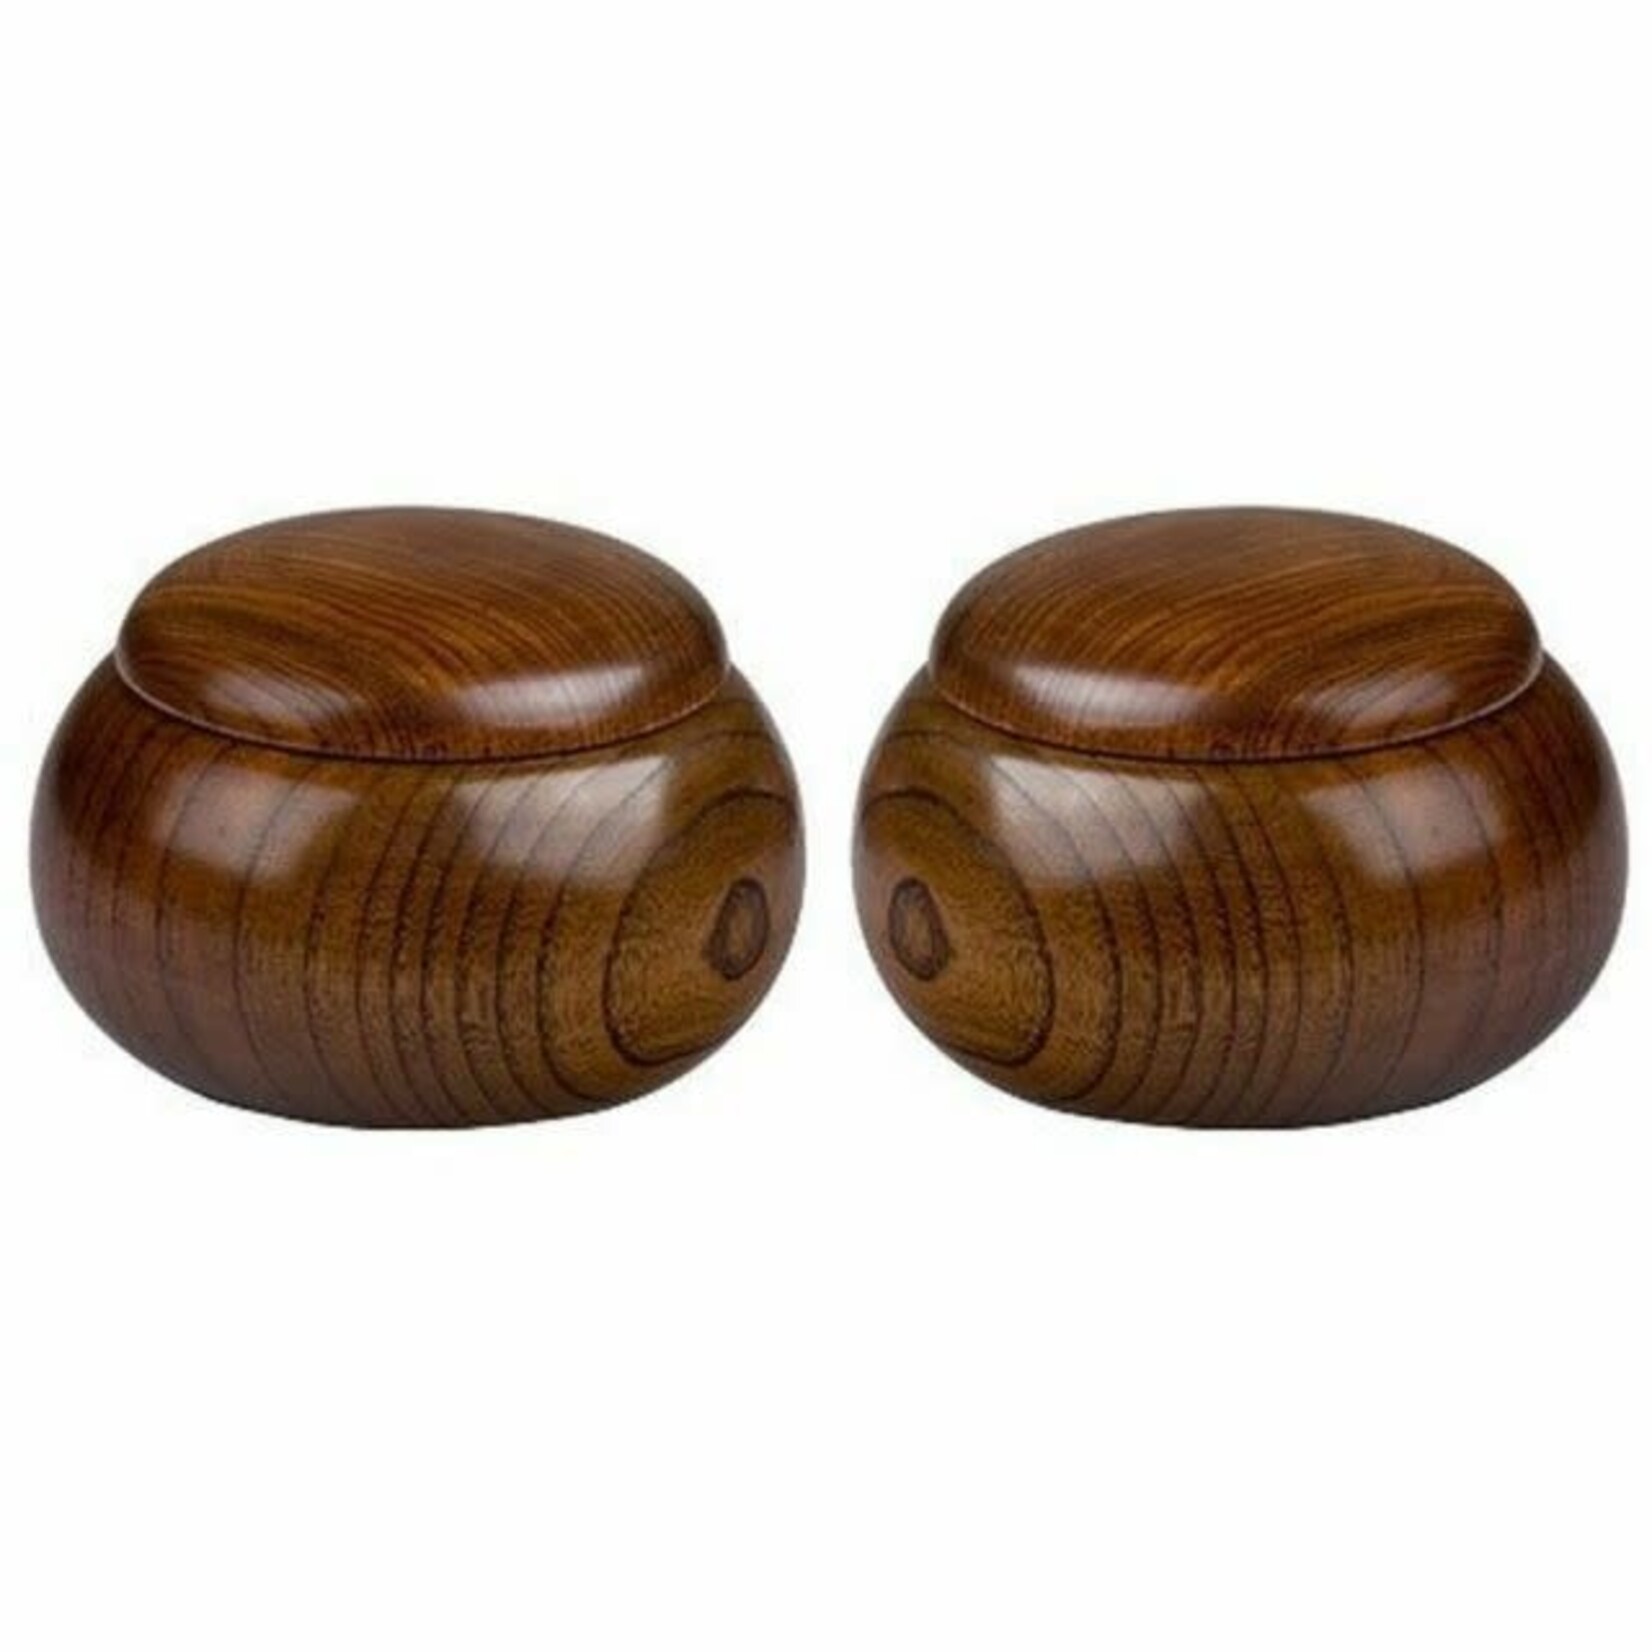 Wooden GO Bowls (pair)